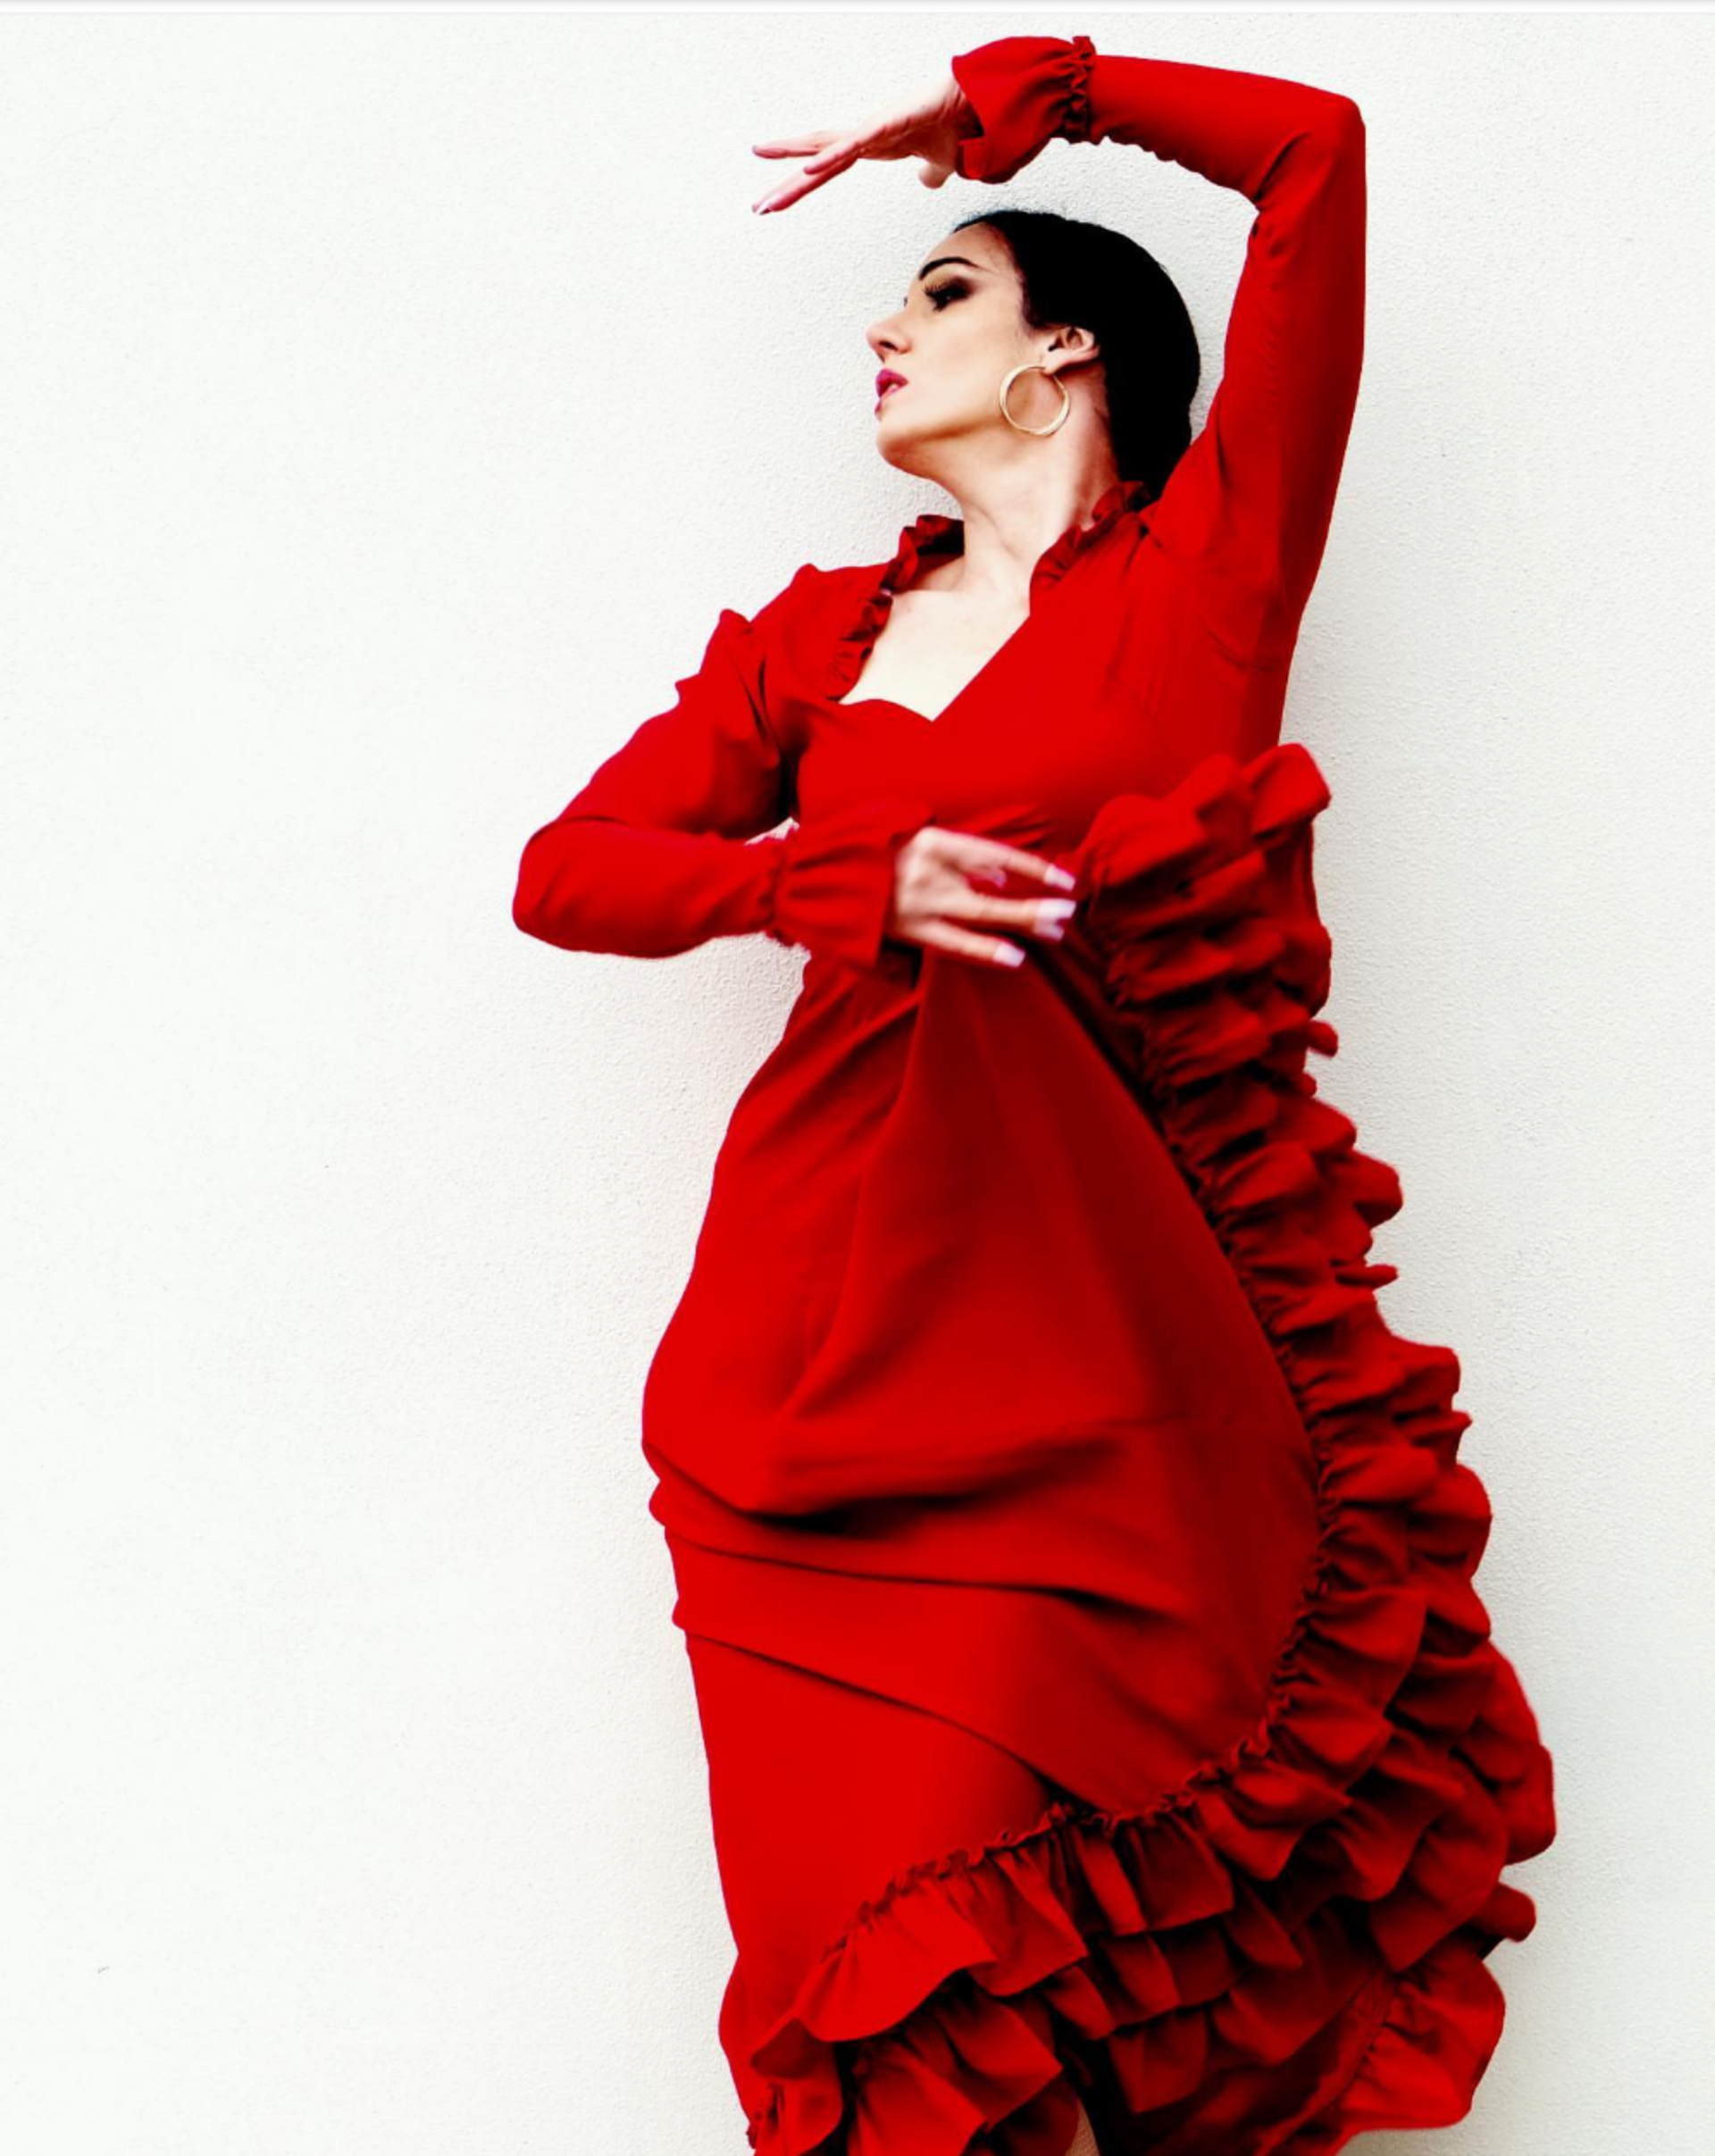 Flamenco Performance - March 21st  by Savannah Fuentes